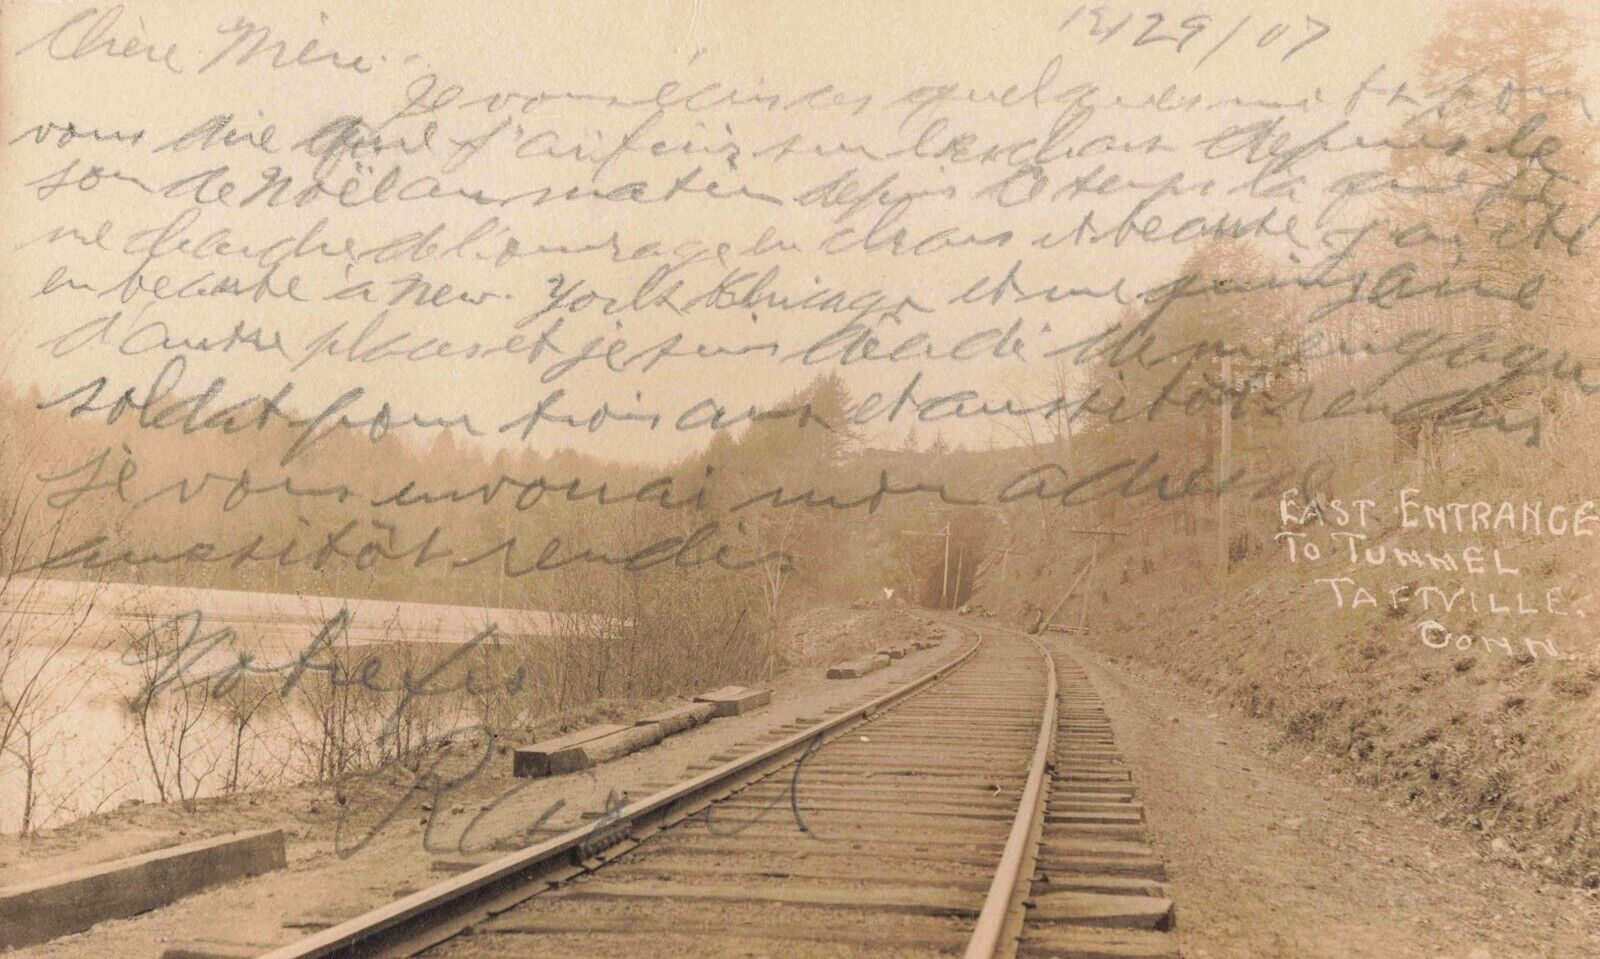 East Entrance Tunnel Taftville Connecticut Railroad Tracks 1907 Real Photo RPPC